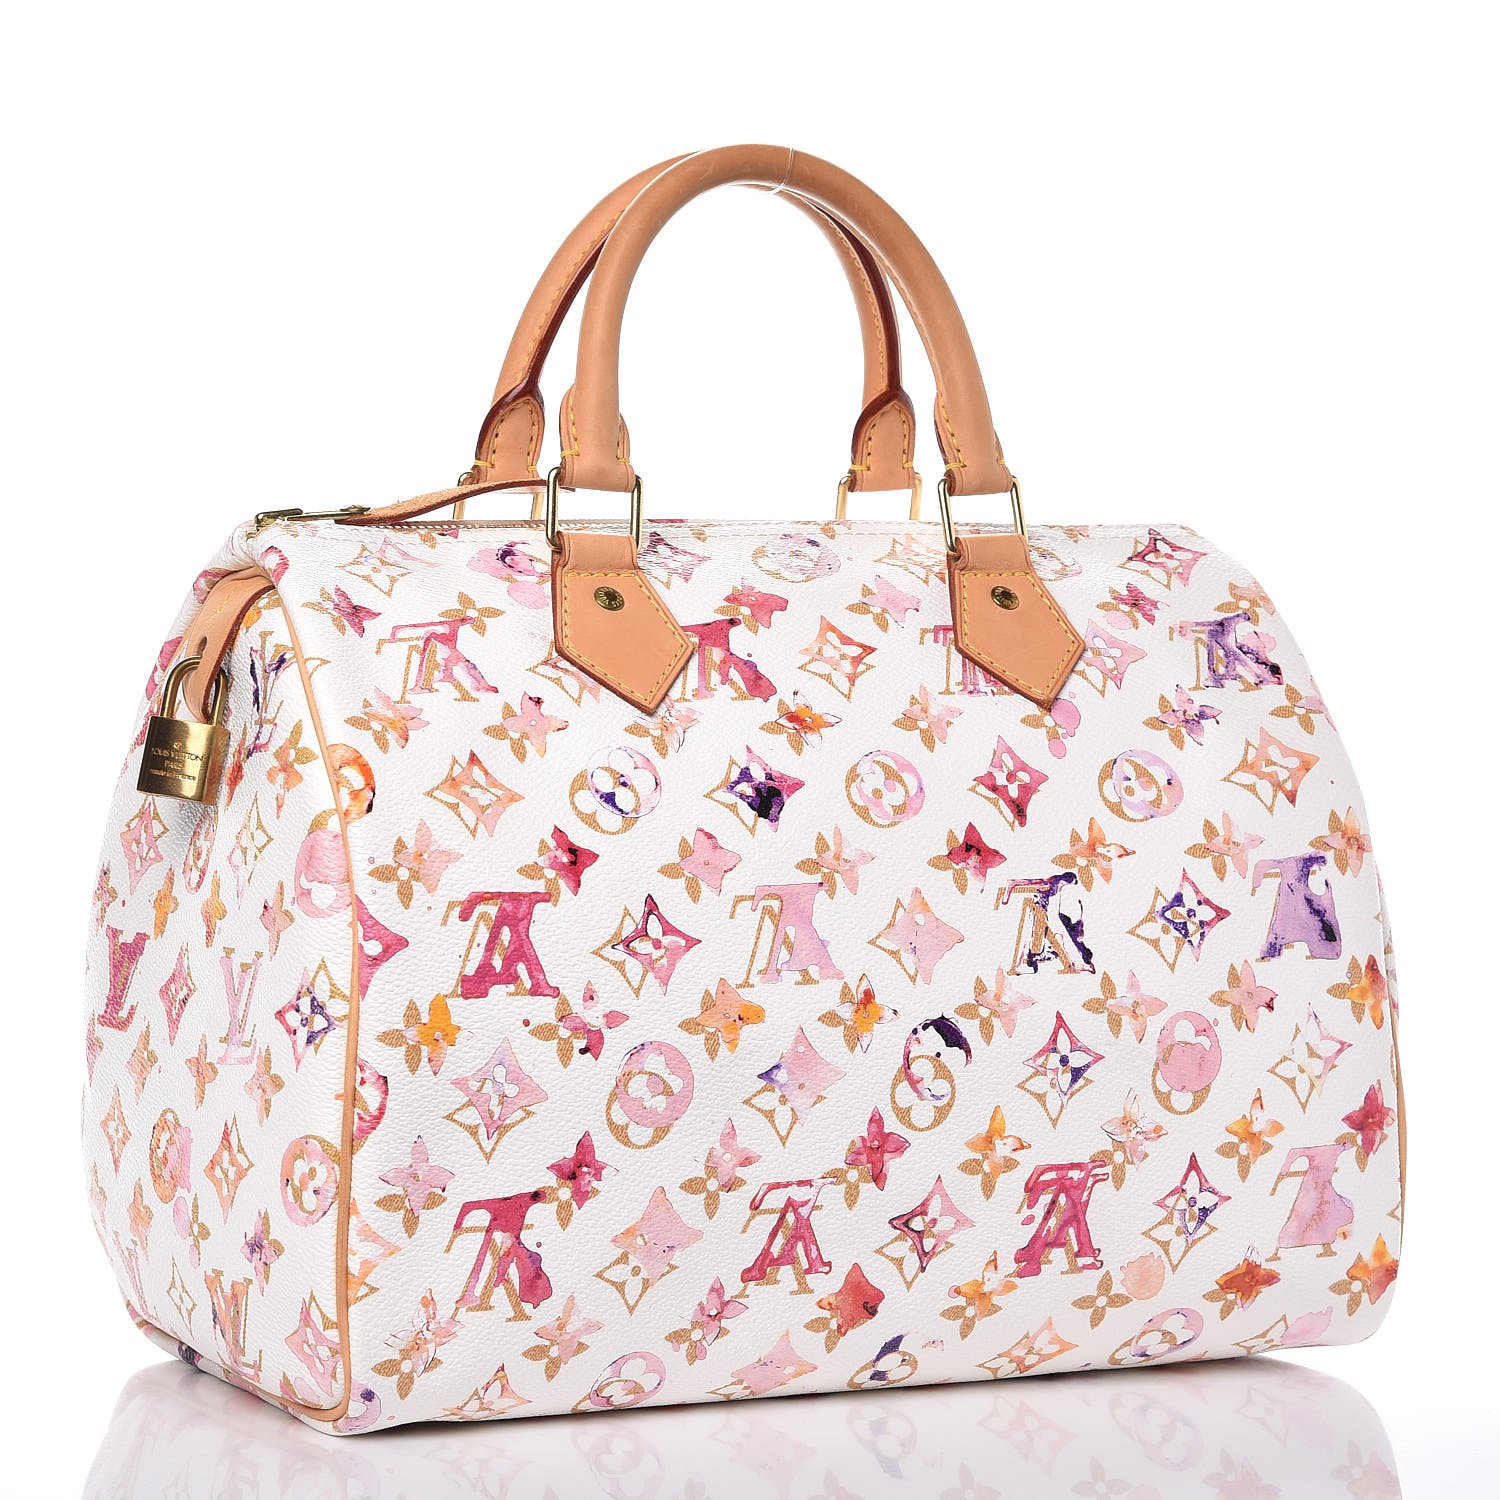 Louis Vuitton Bag Keepall Bandouliere 45 Watercolor Multico | 3D model